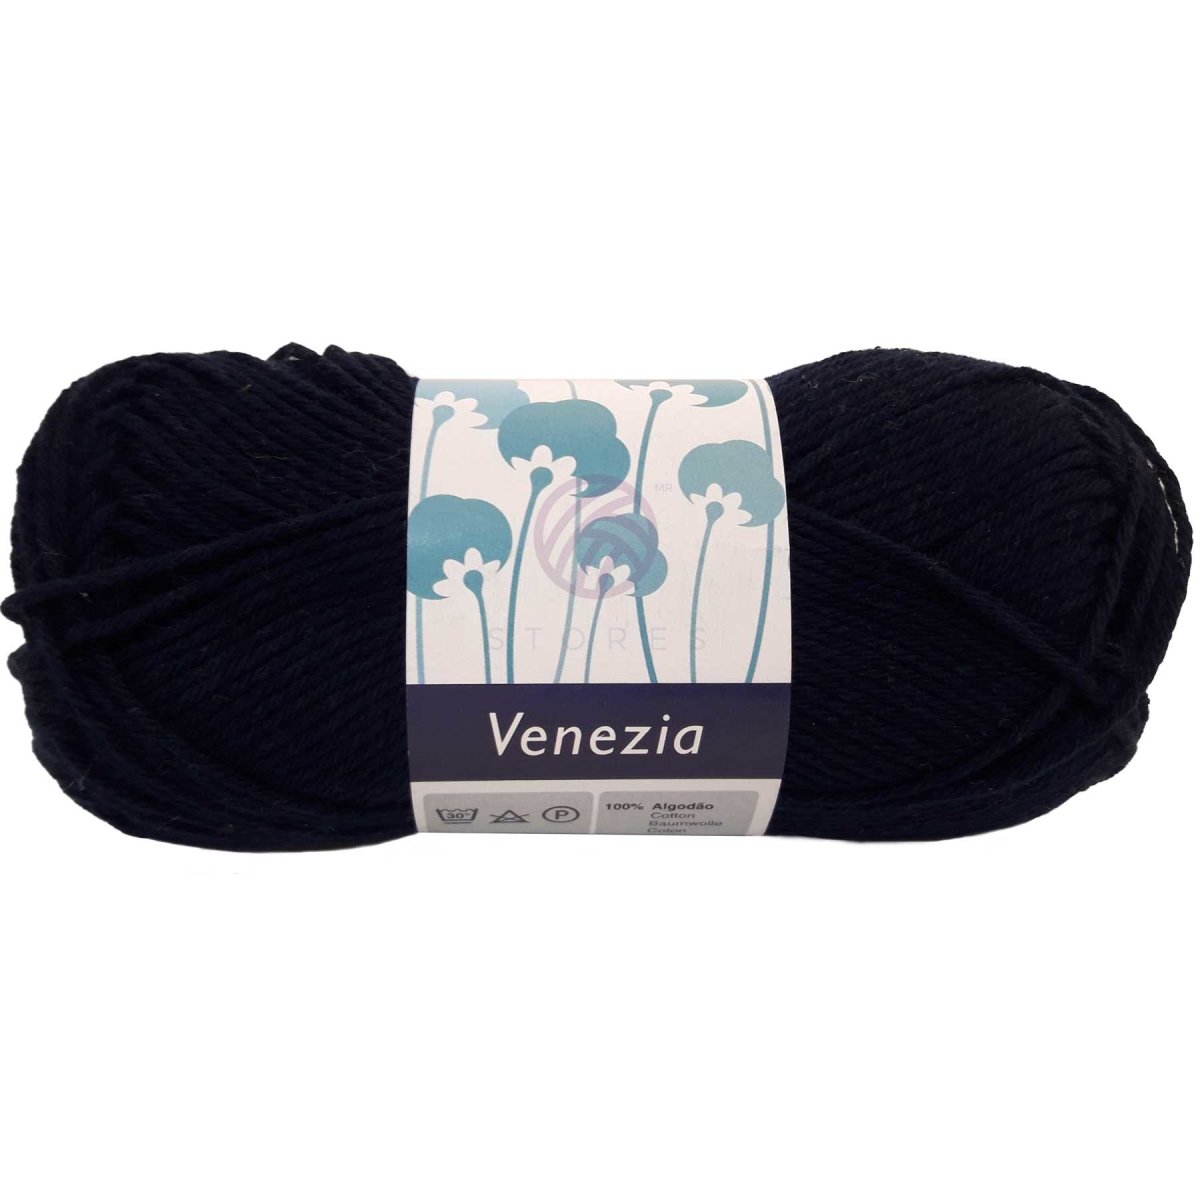 VENEZIA - Crochetstores204-085606850204084